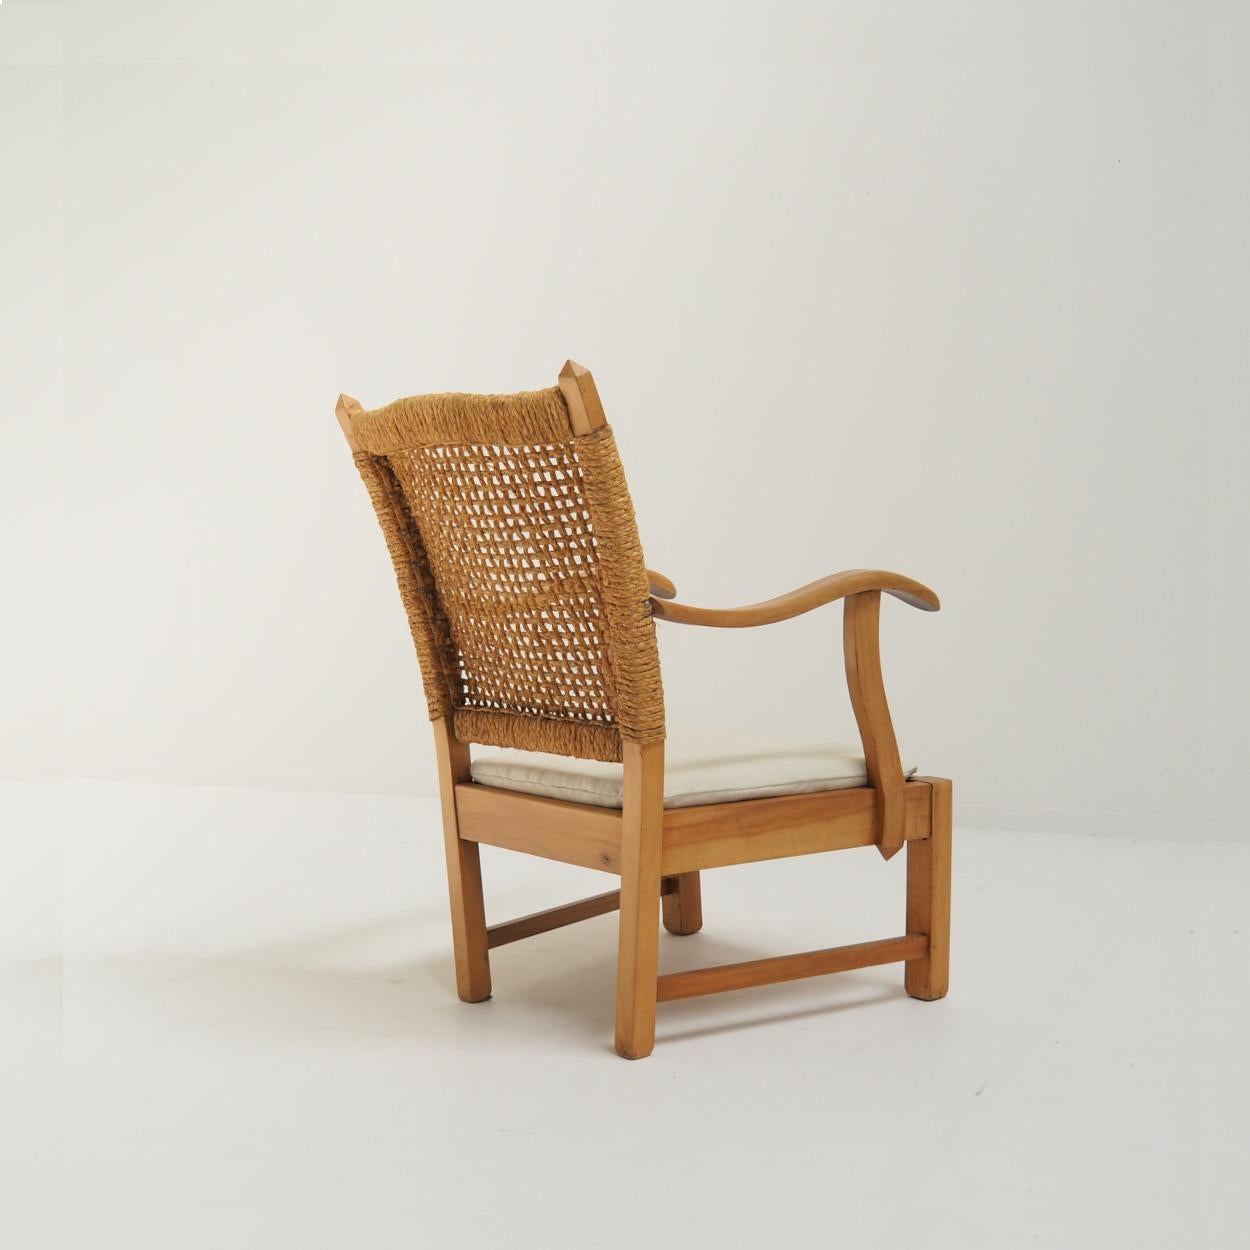 Dutch 1930s Modernist Rope Chair attr. to Bas Van Pelt, The Netherlands